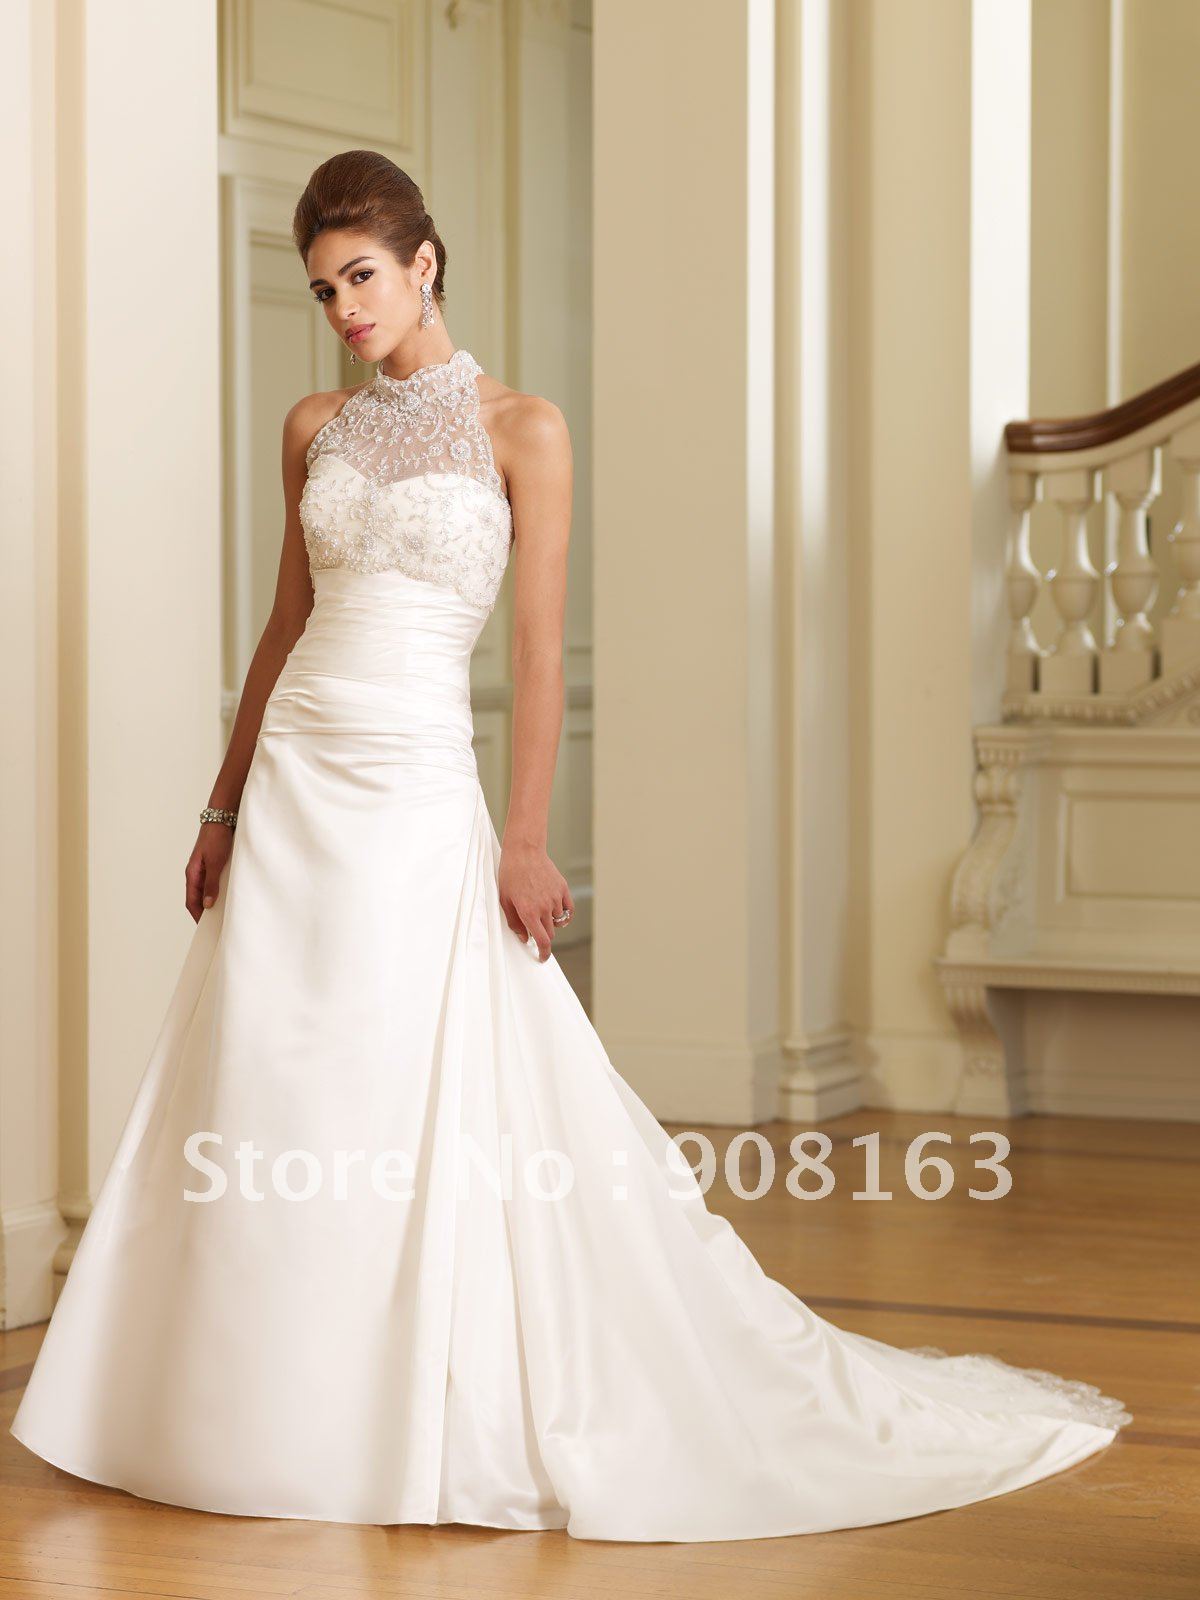 elegant wedding dress - lace top